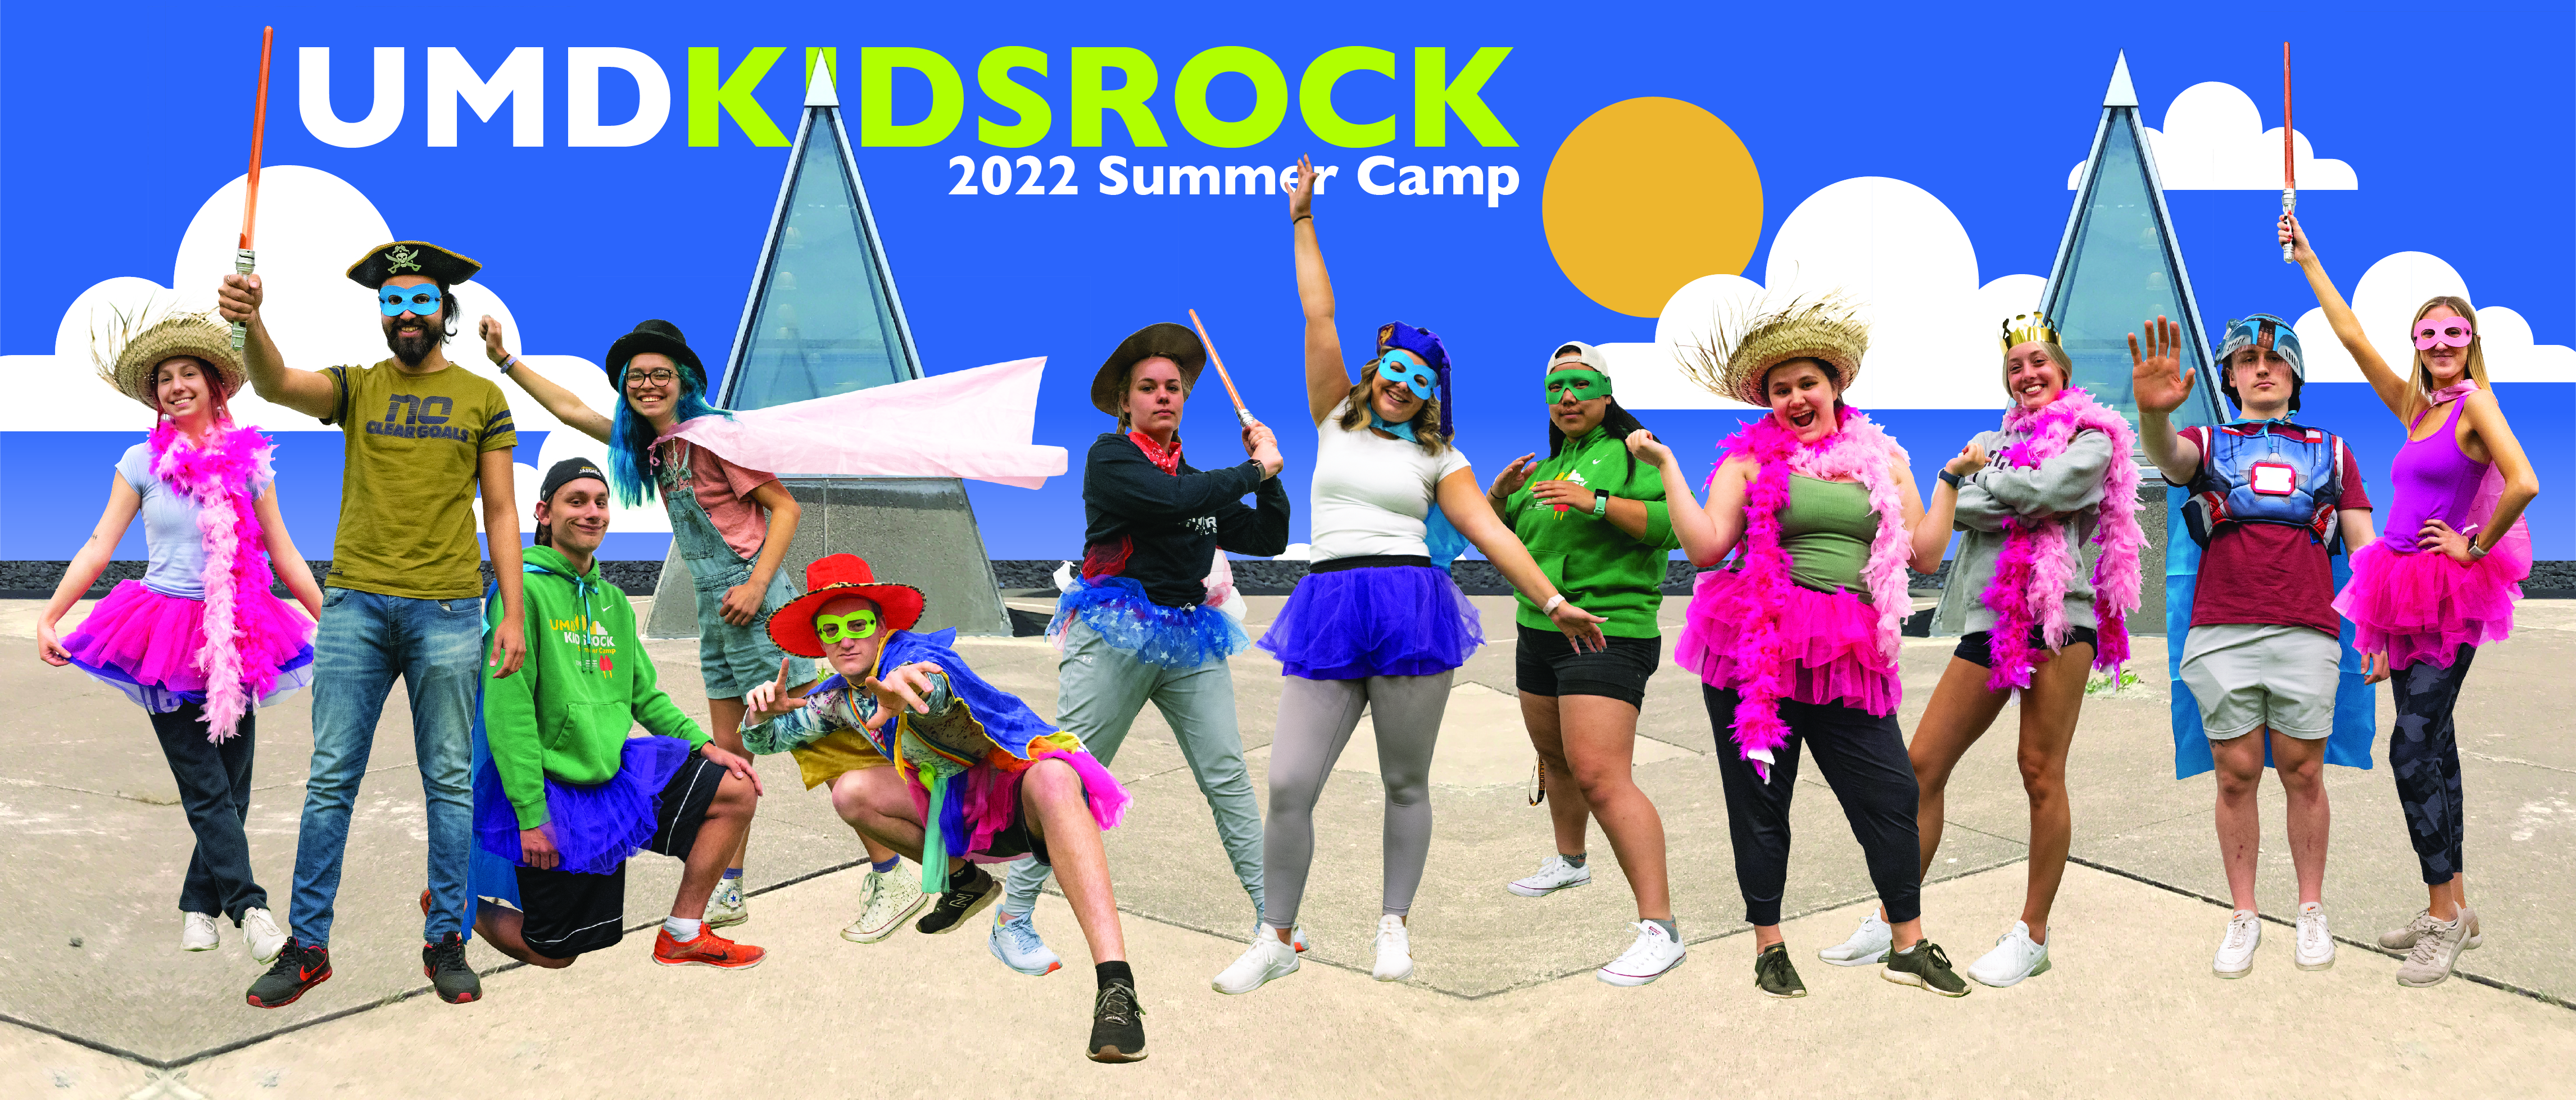 12 camp conselors wearing costumes text: UMDKIDSROCK 2022 Summer Camp